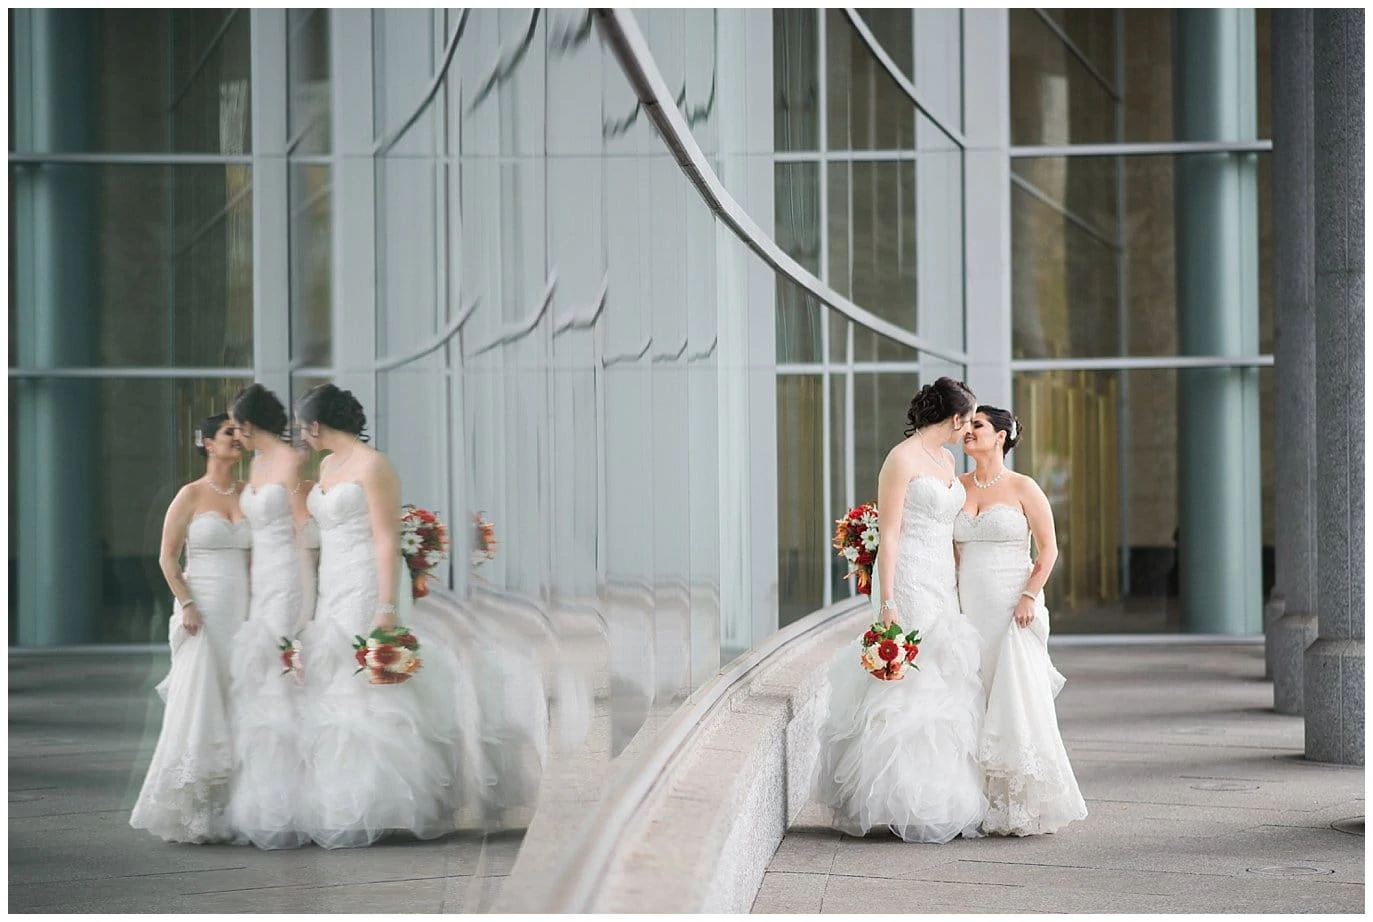 reflection of brides at Denver Courthouse wedding photo